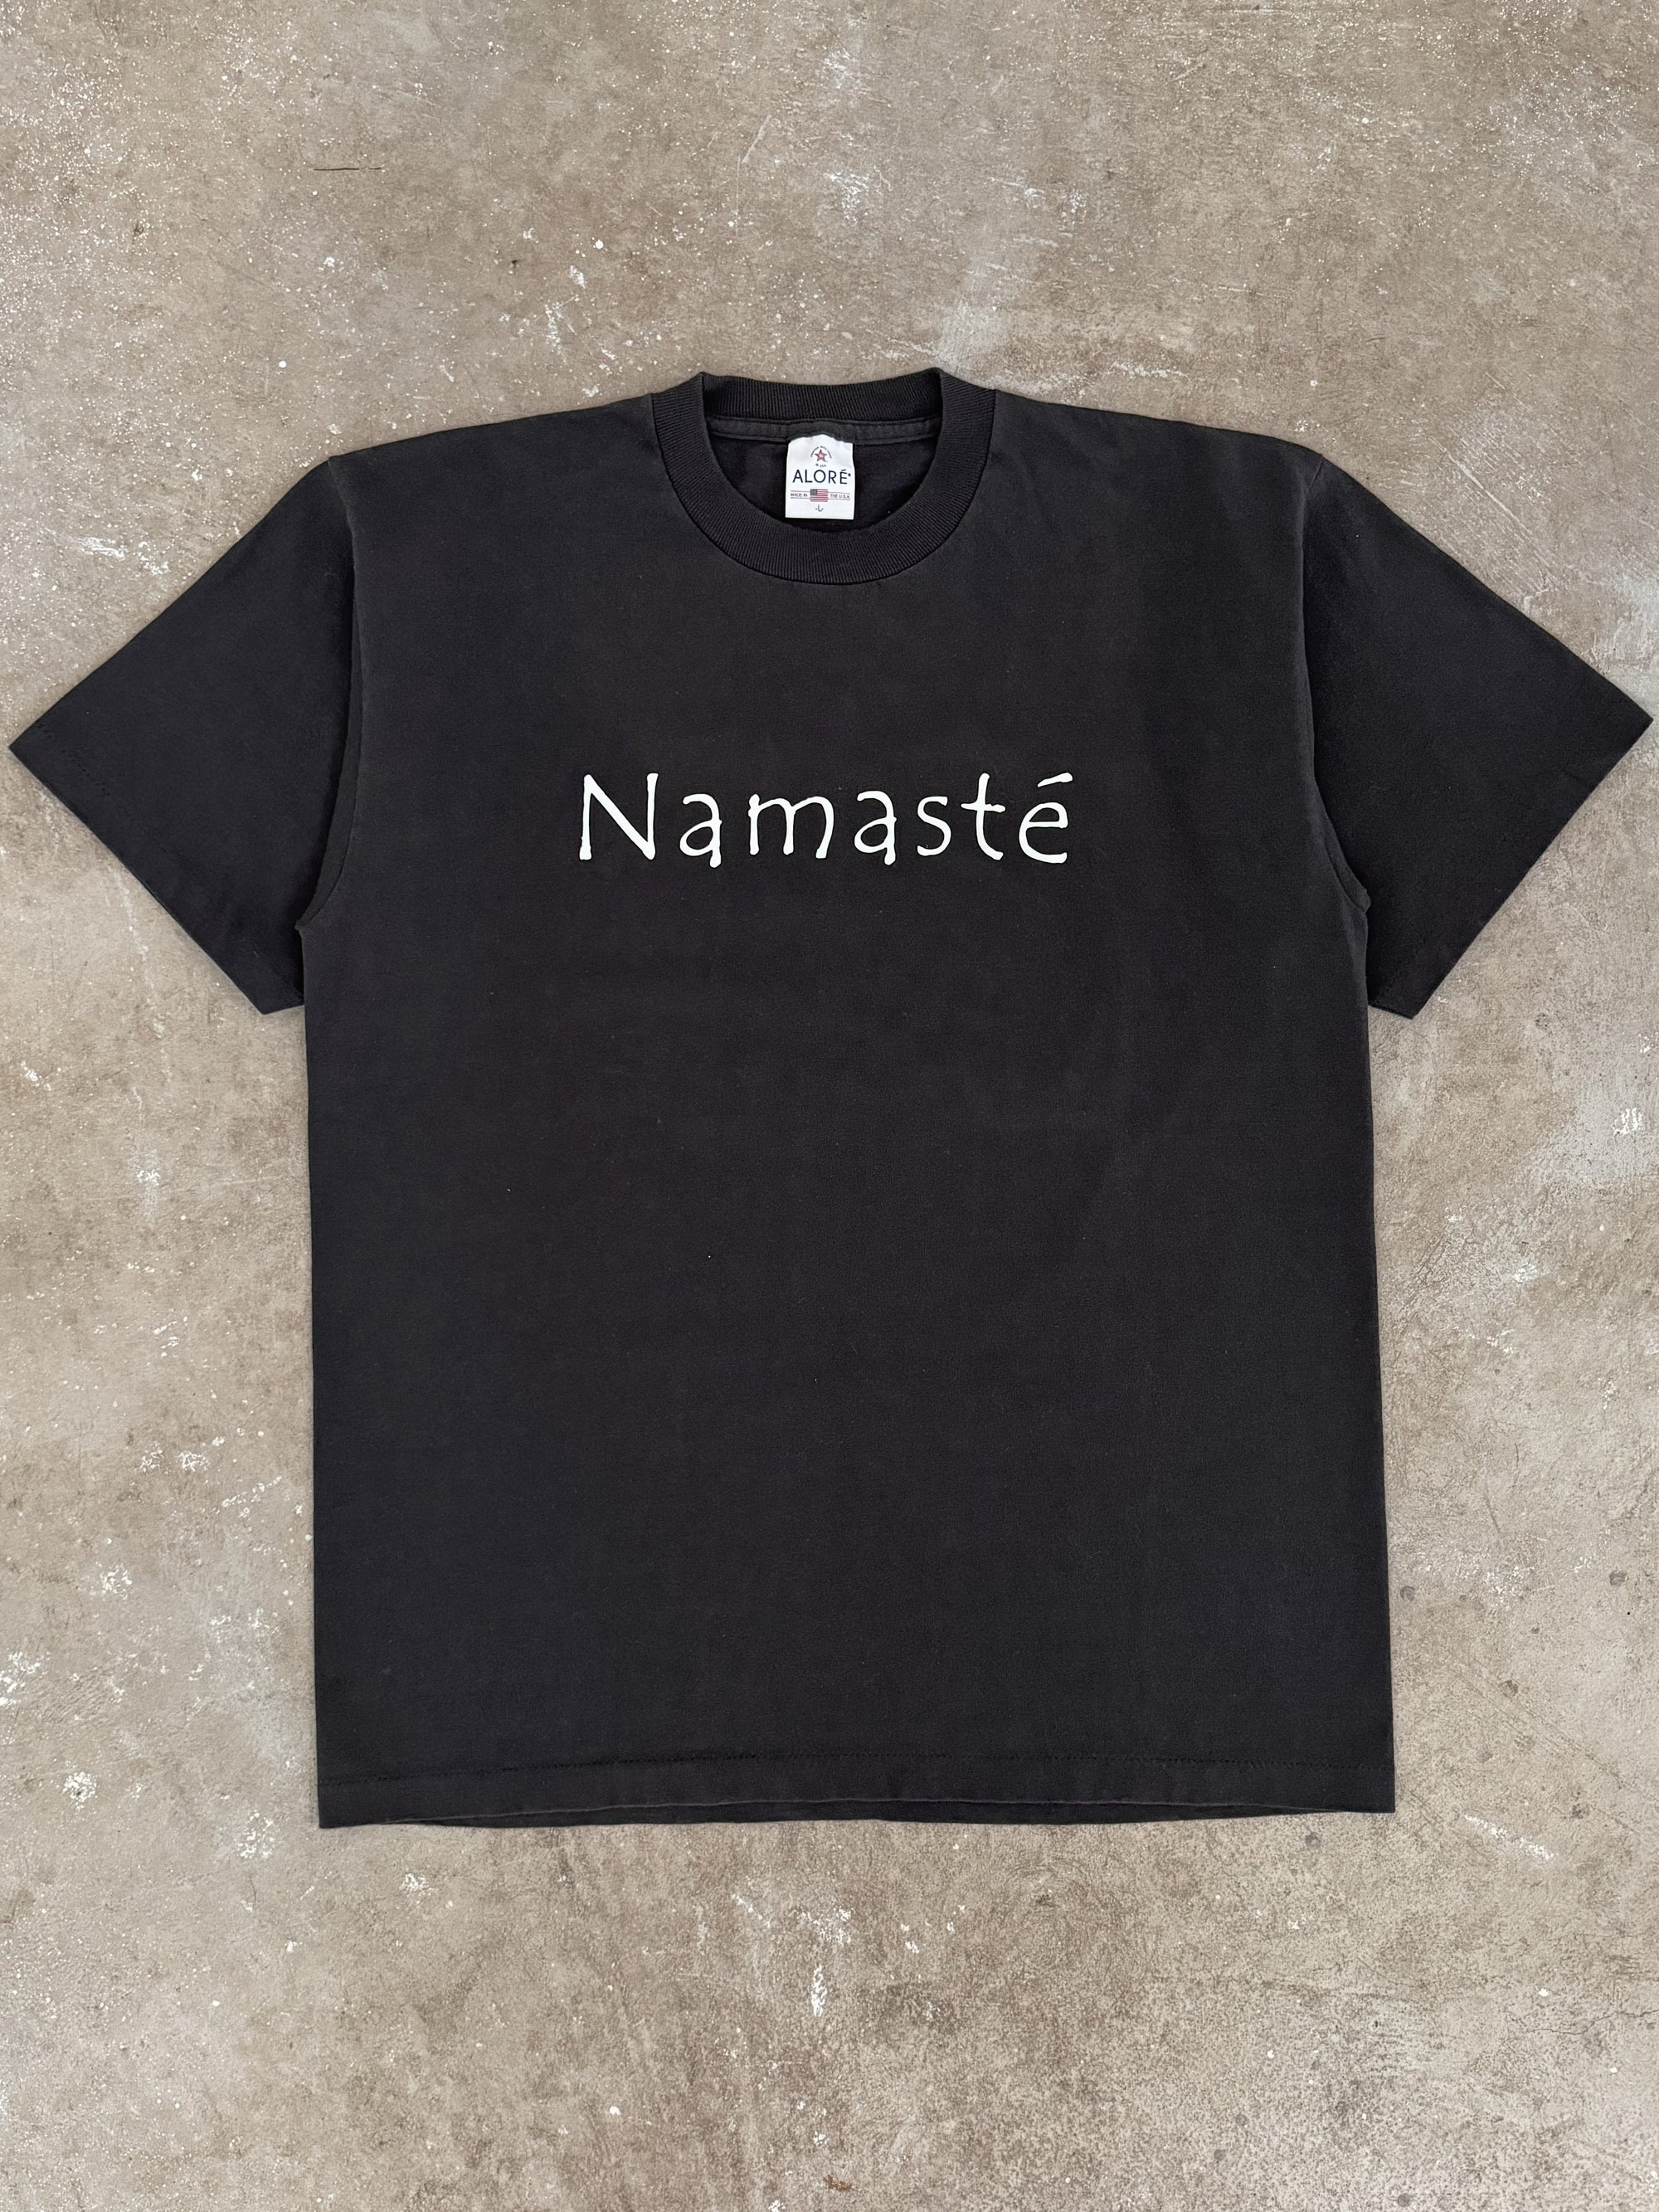 1990s "Namaste" Tee (L)